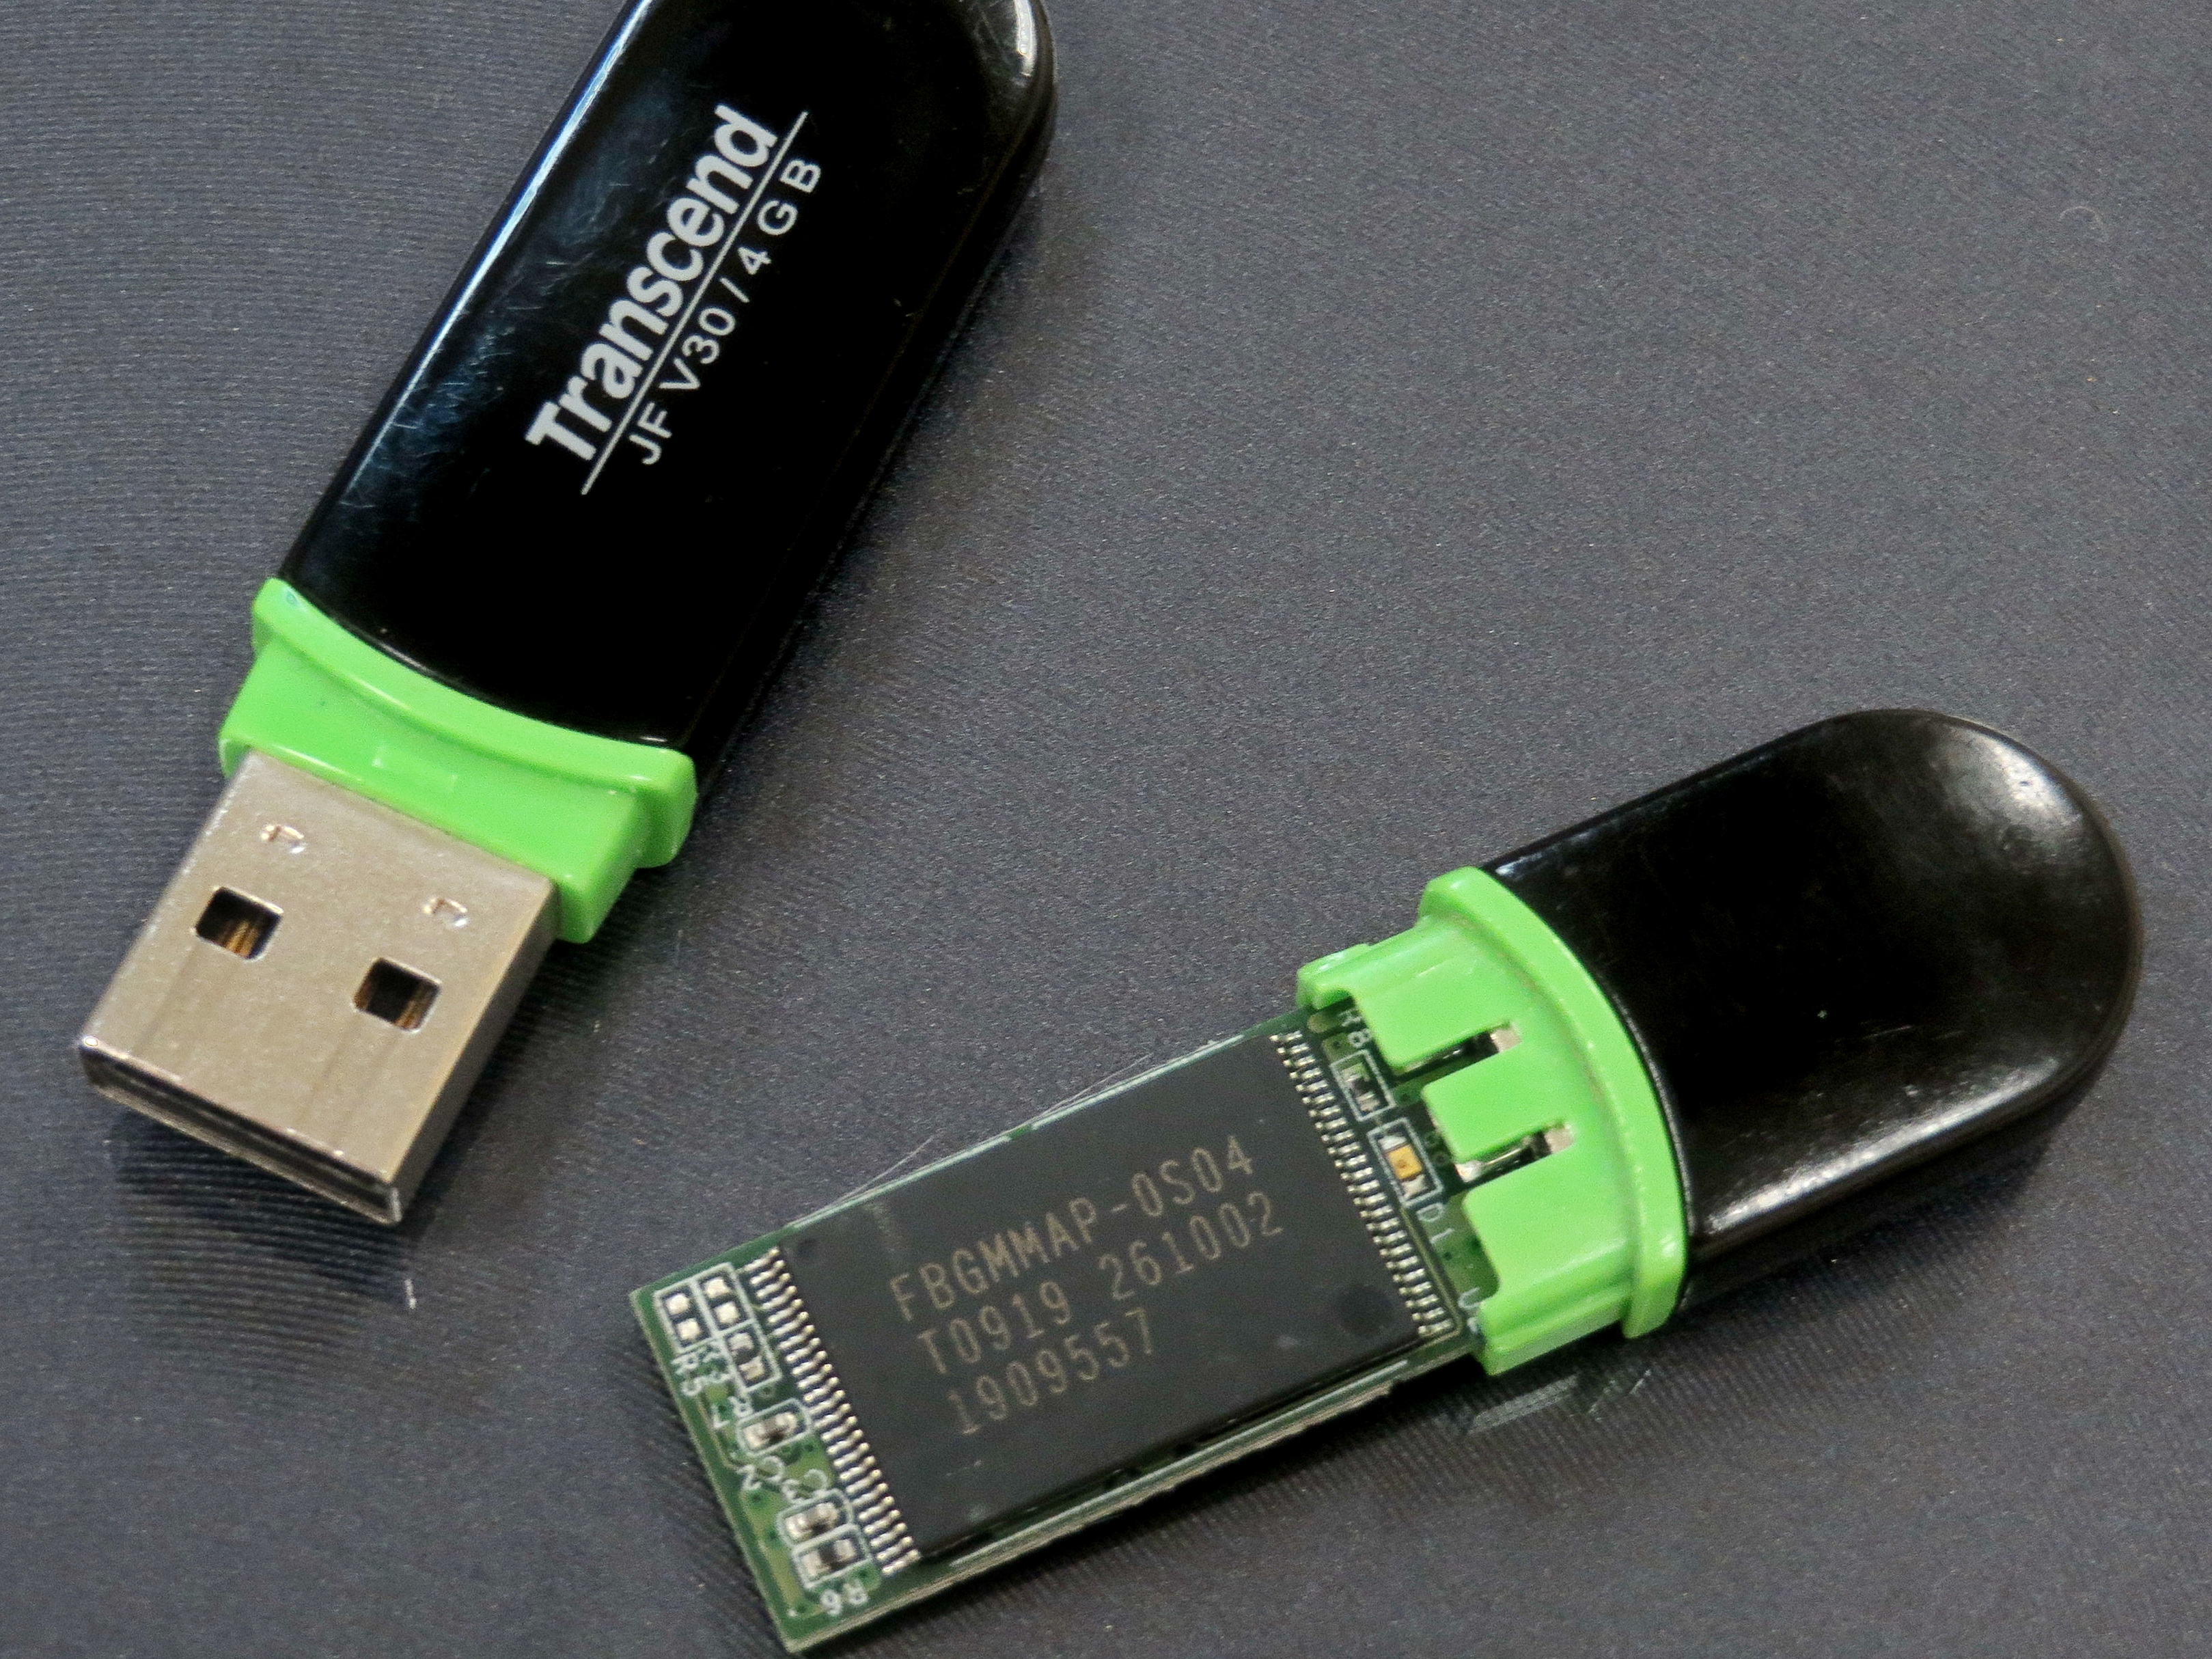 COMPANY PMP PLATFORM OPN USB DEVICE DRIVER